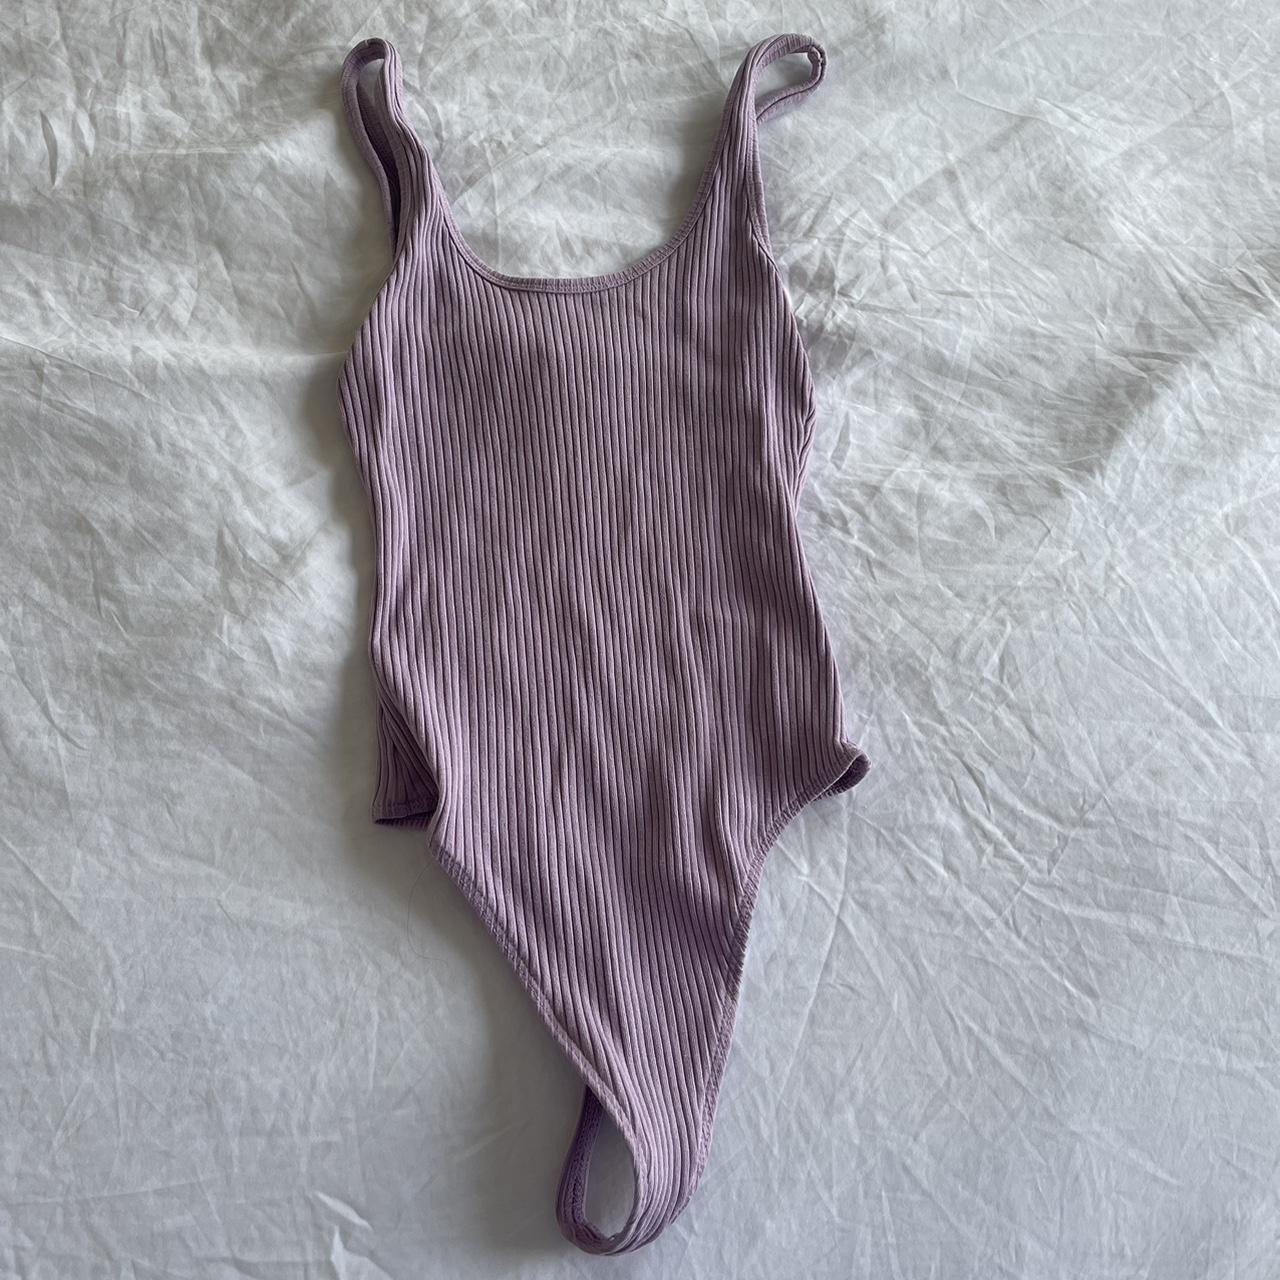 Aritzia lilac bodysuit - Depop